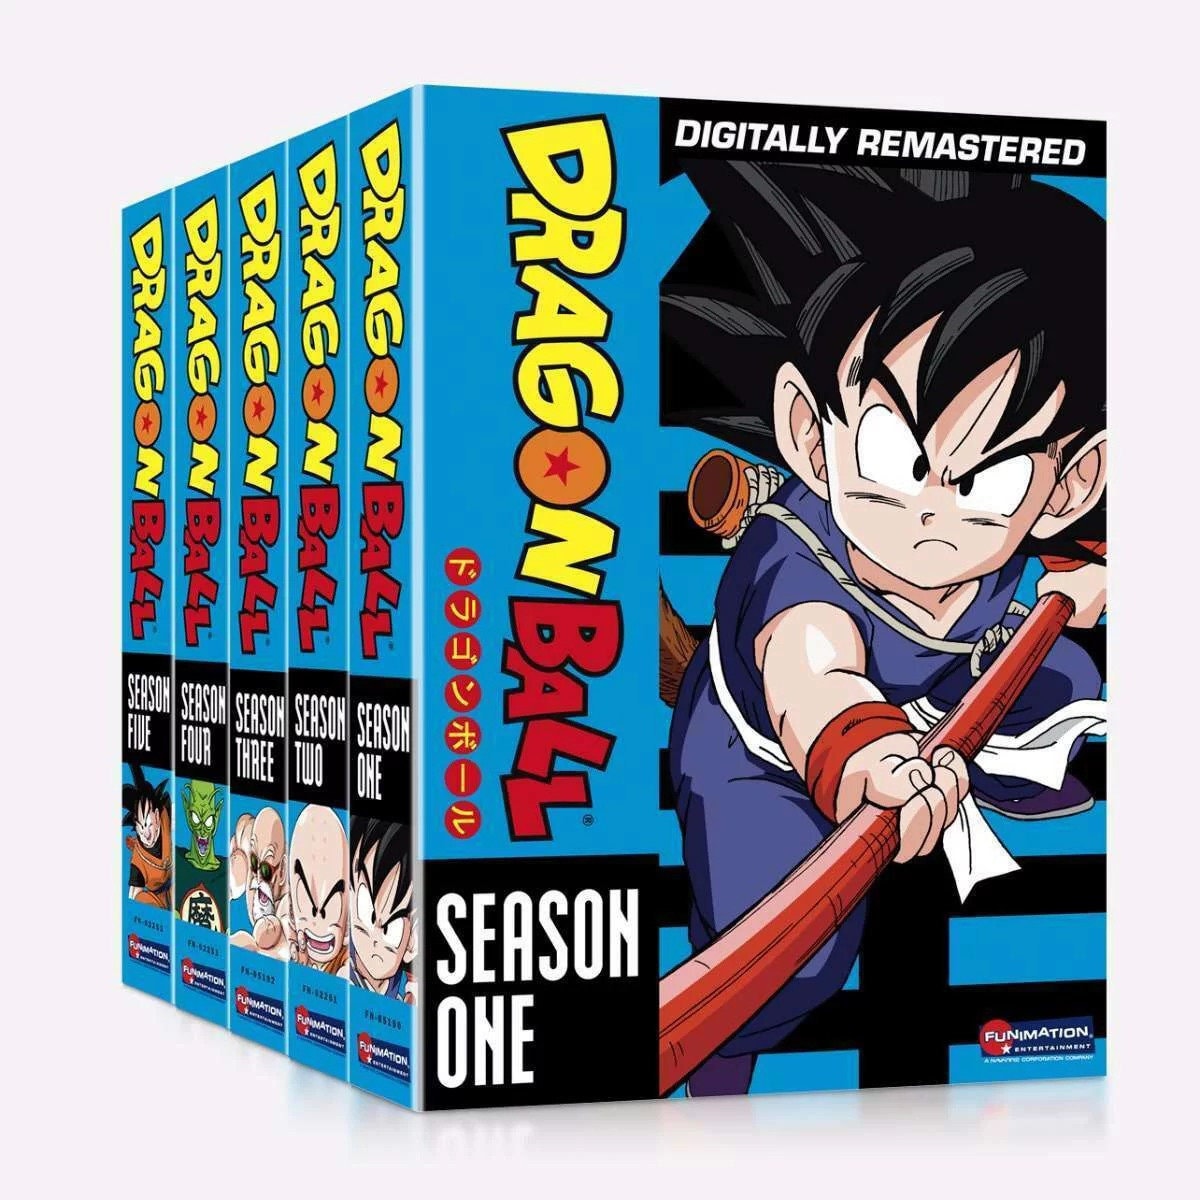 QANIME DVD Dragon Ball Z Episodes 1-291 End English Dubbed & Subtitles